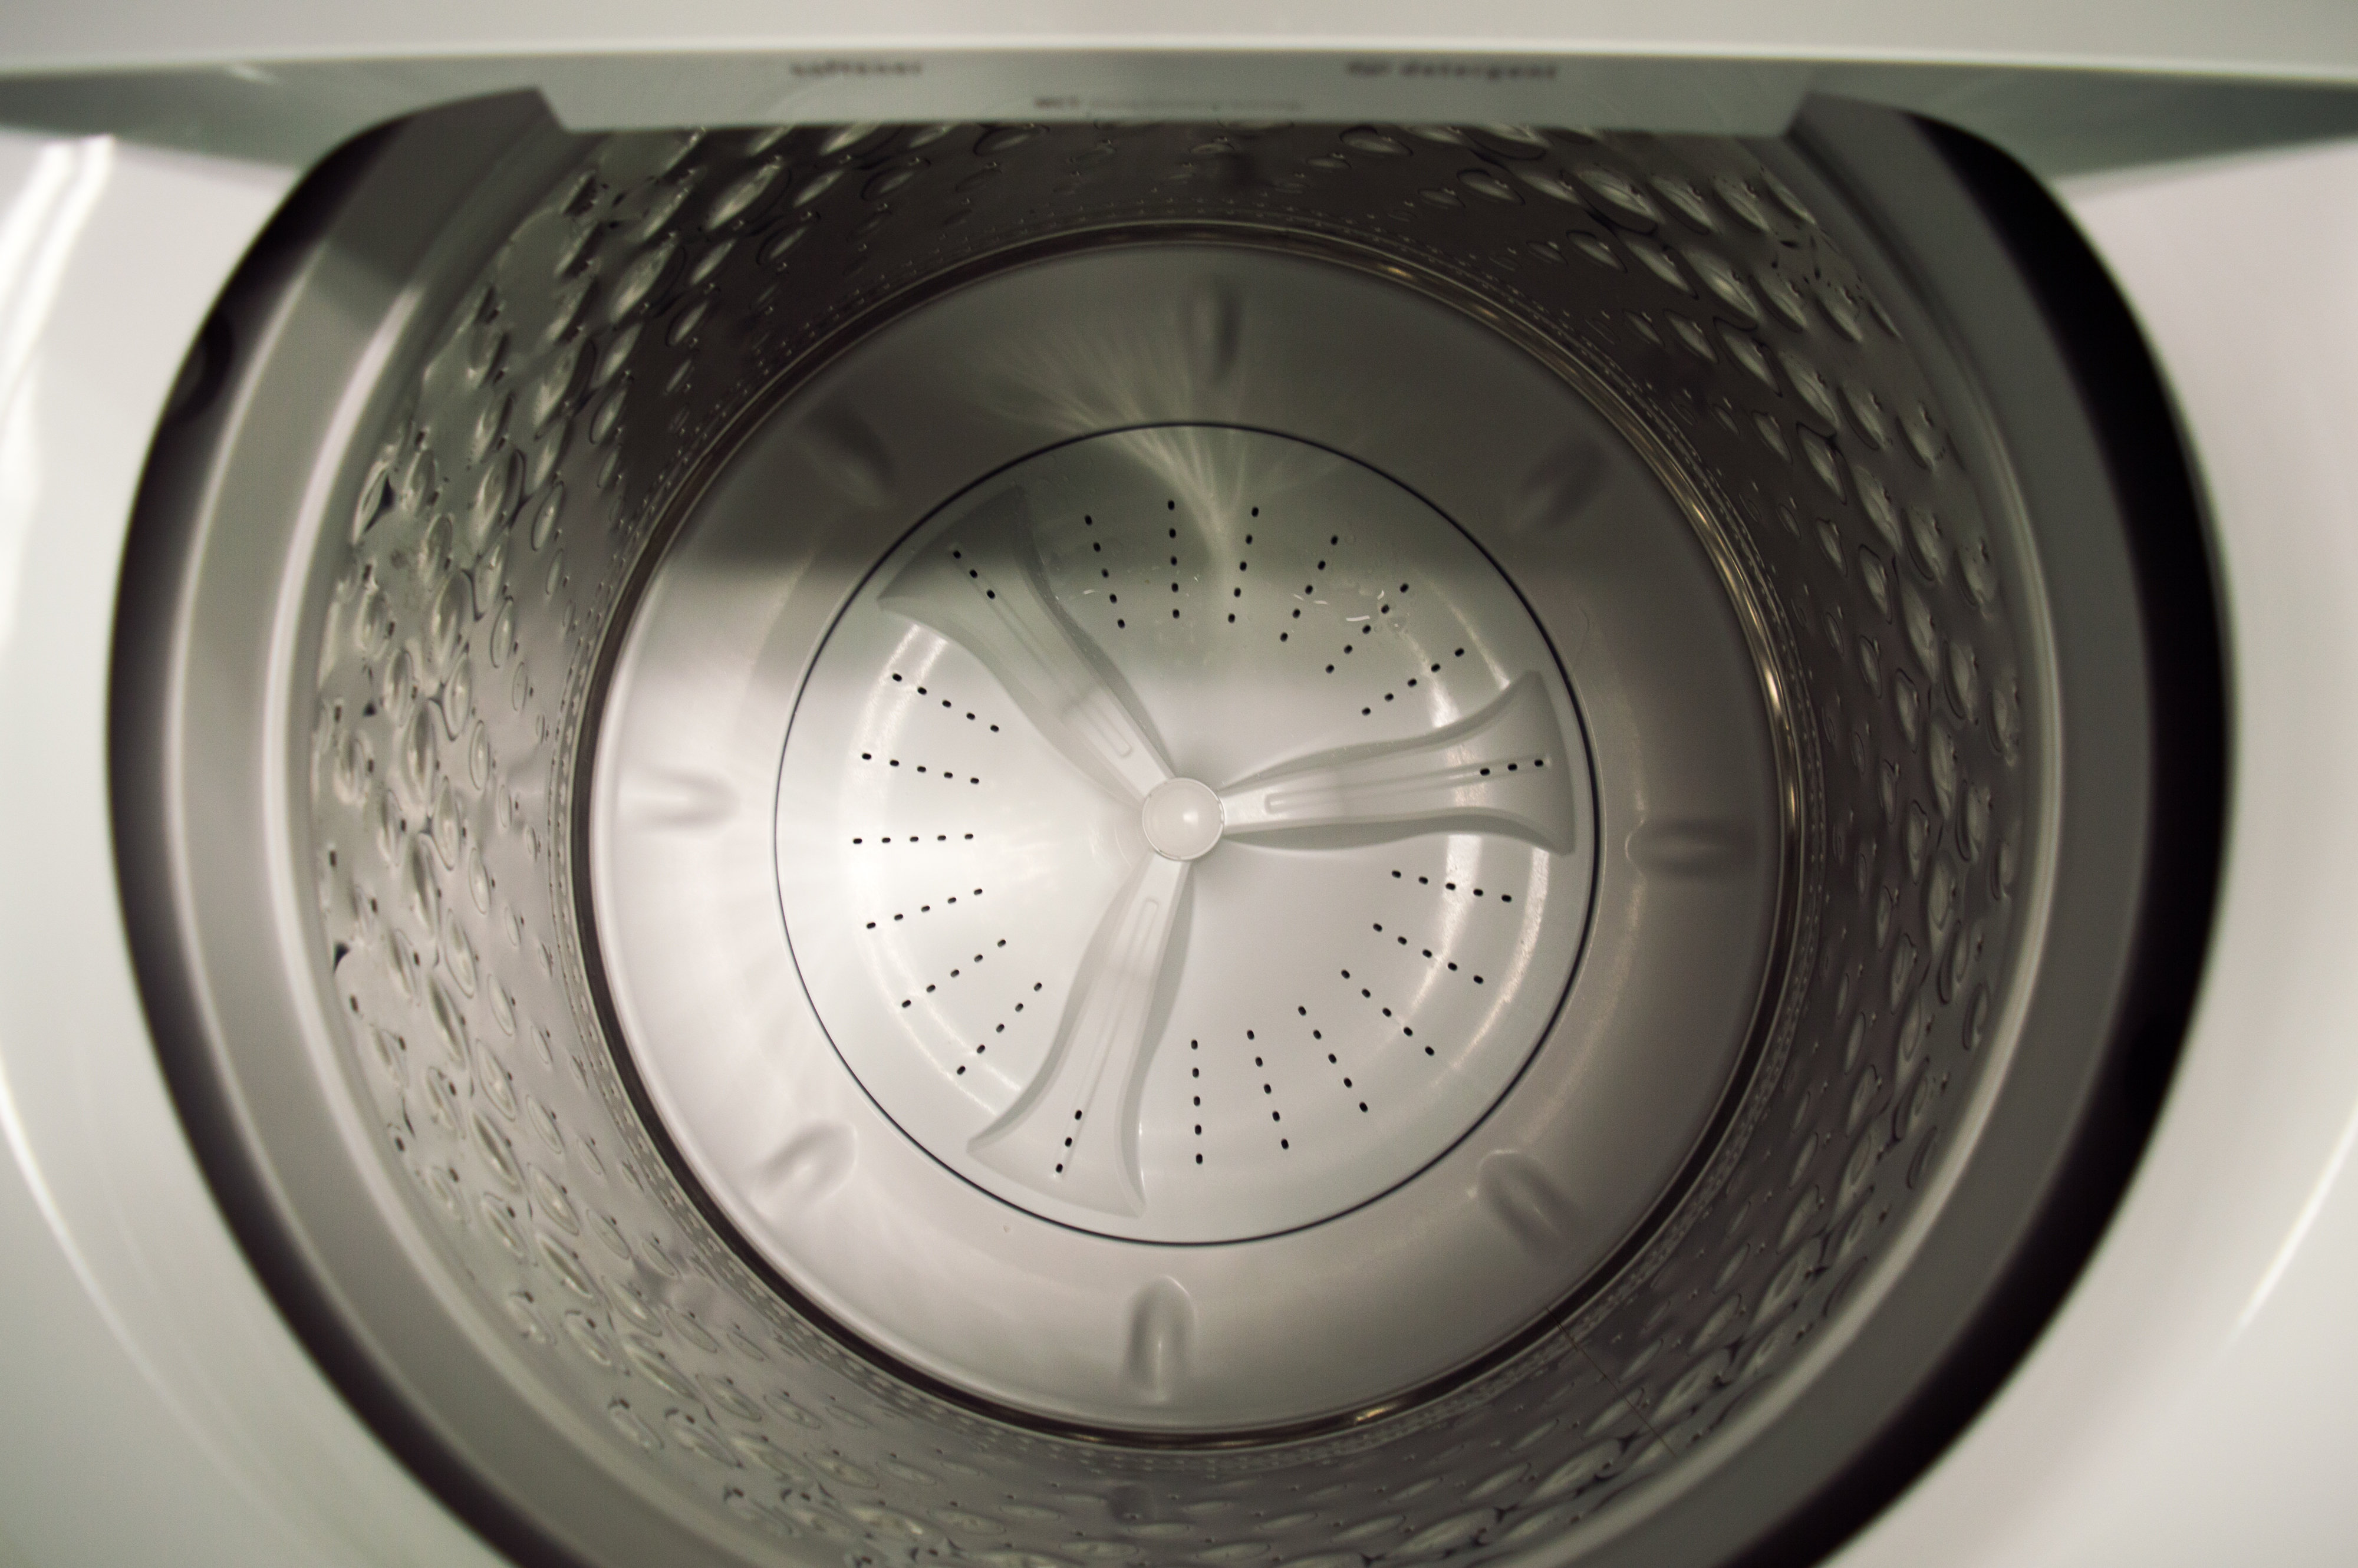 Maytag Bravos MVWX655DW Washing Machine Review Laundry